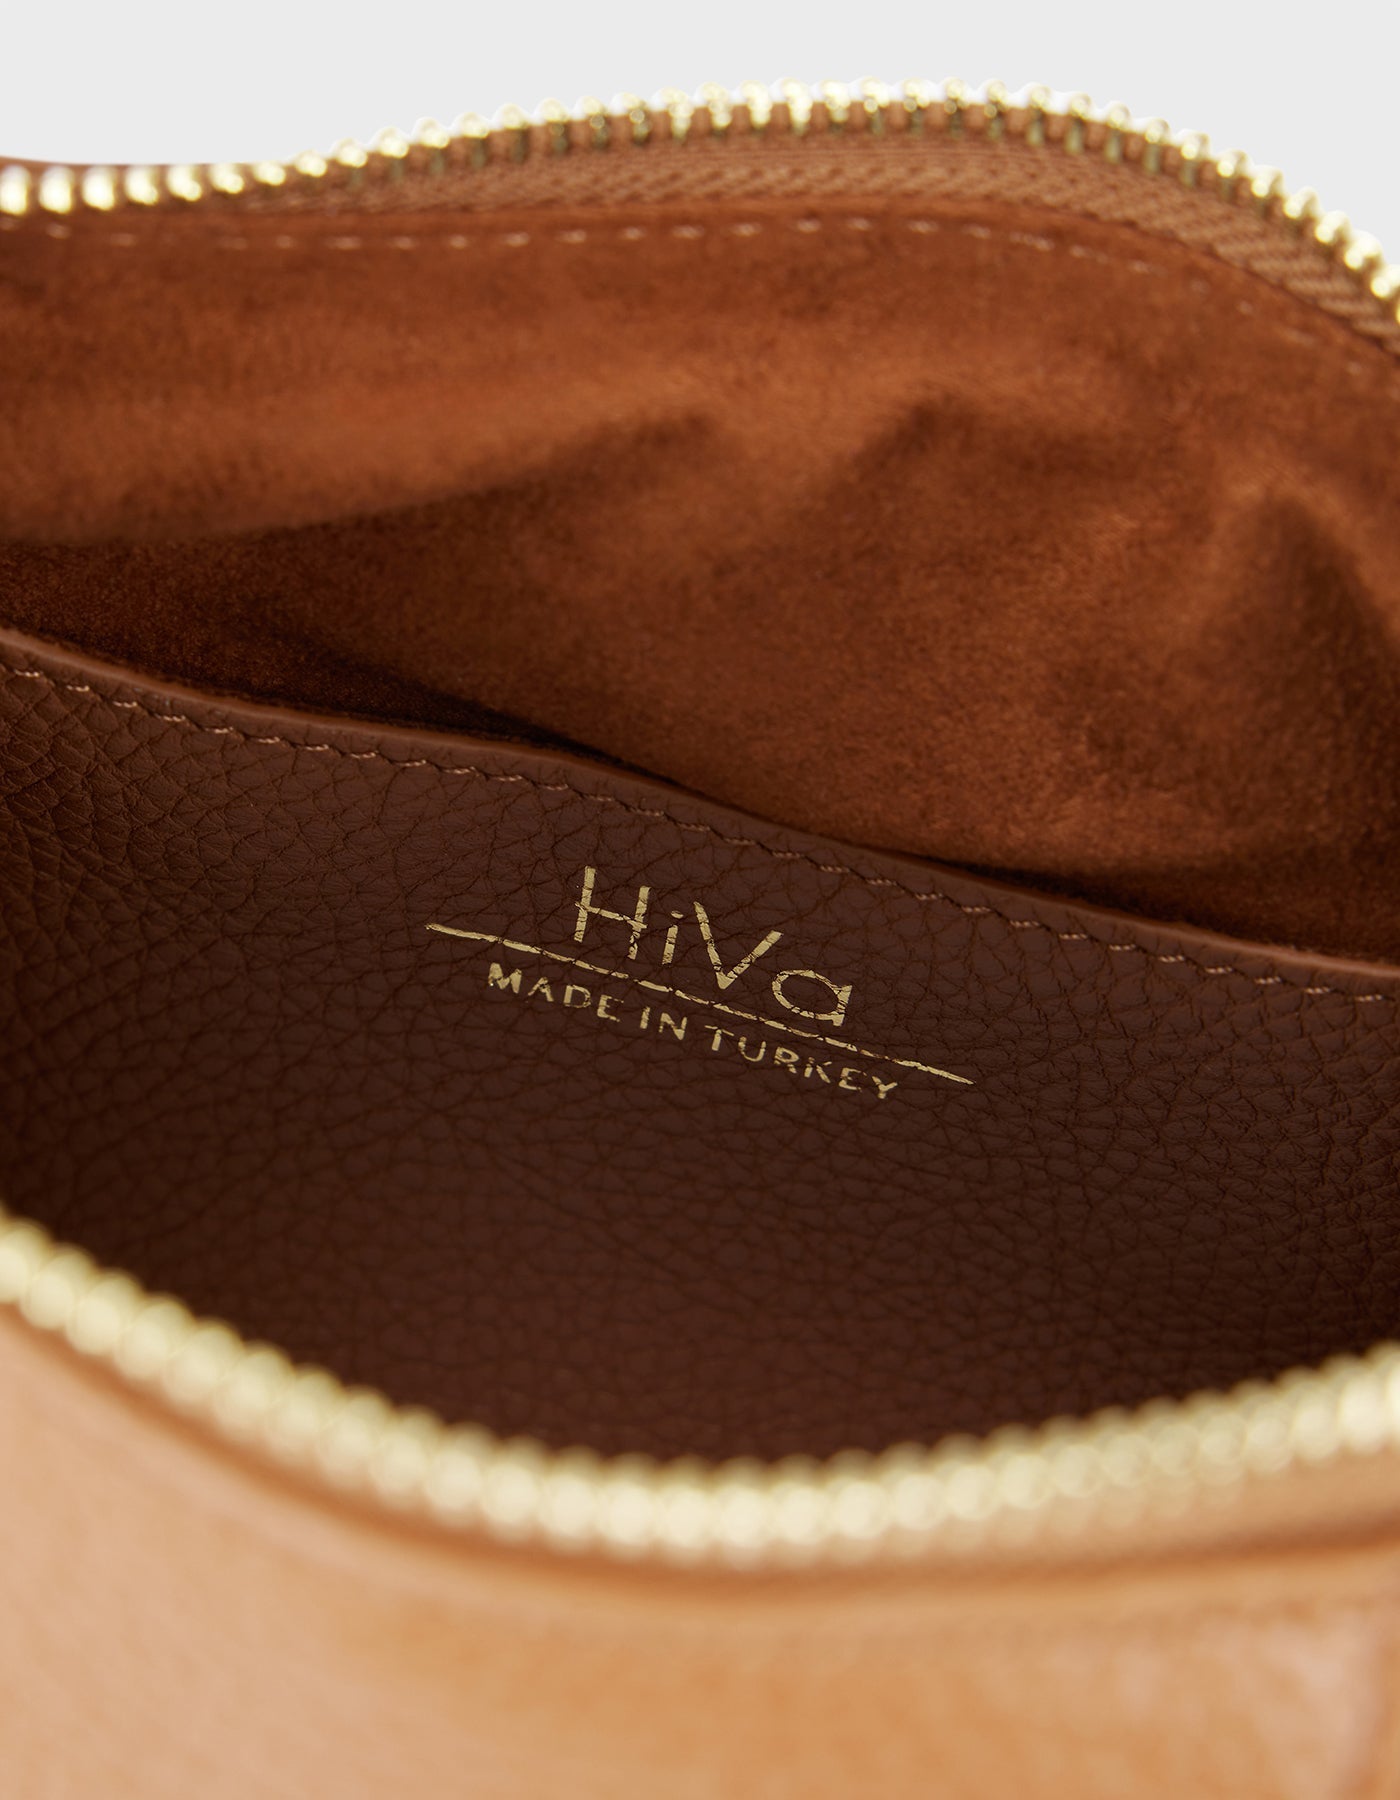 HiVa Atelier | Midi Croissant Bag Wood | Beautiful and Versatile